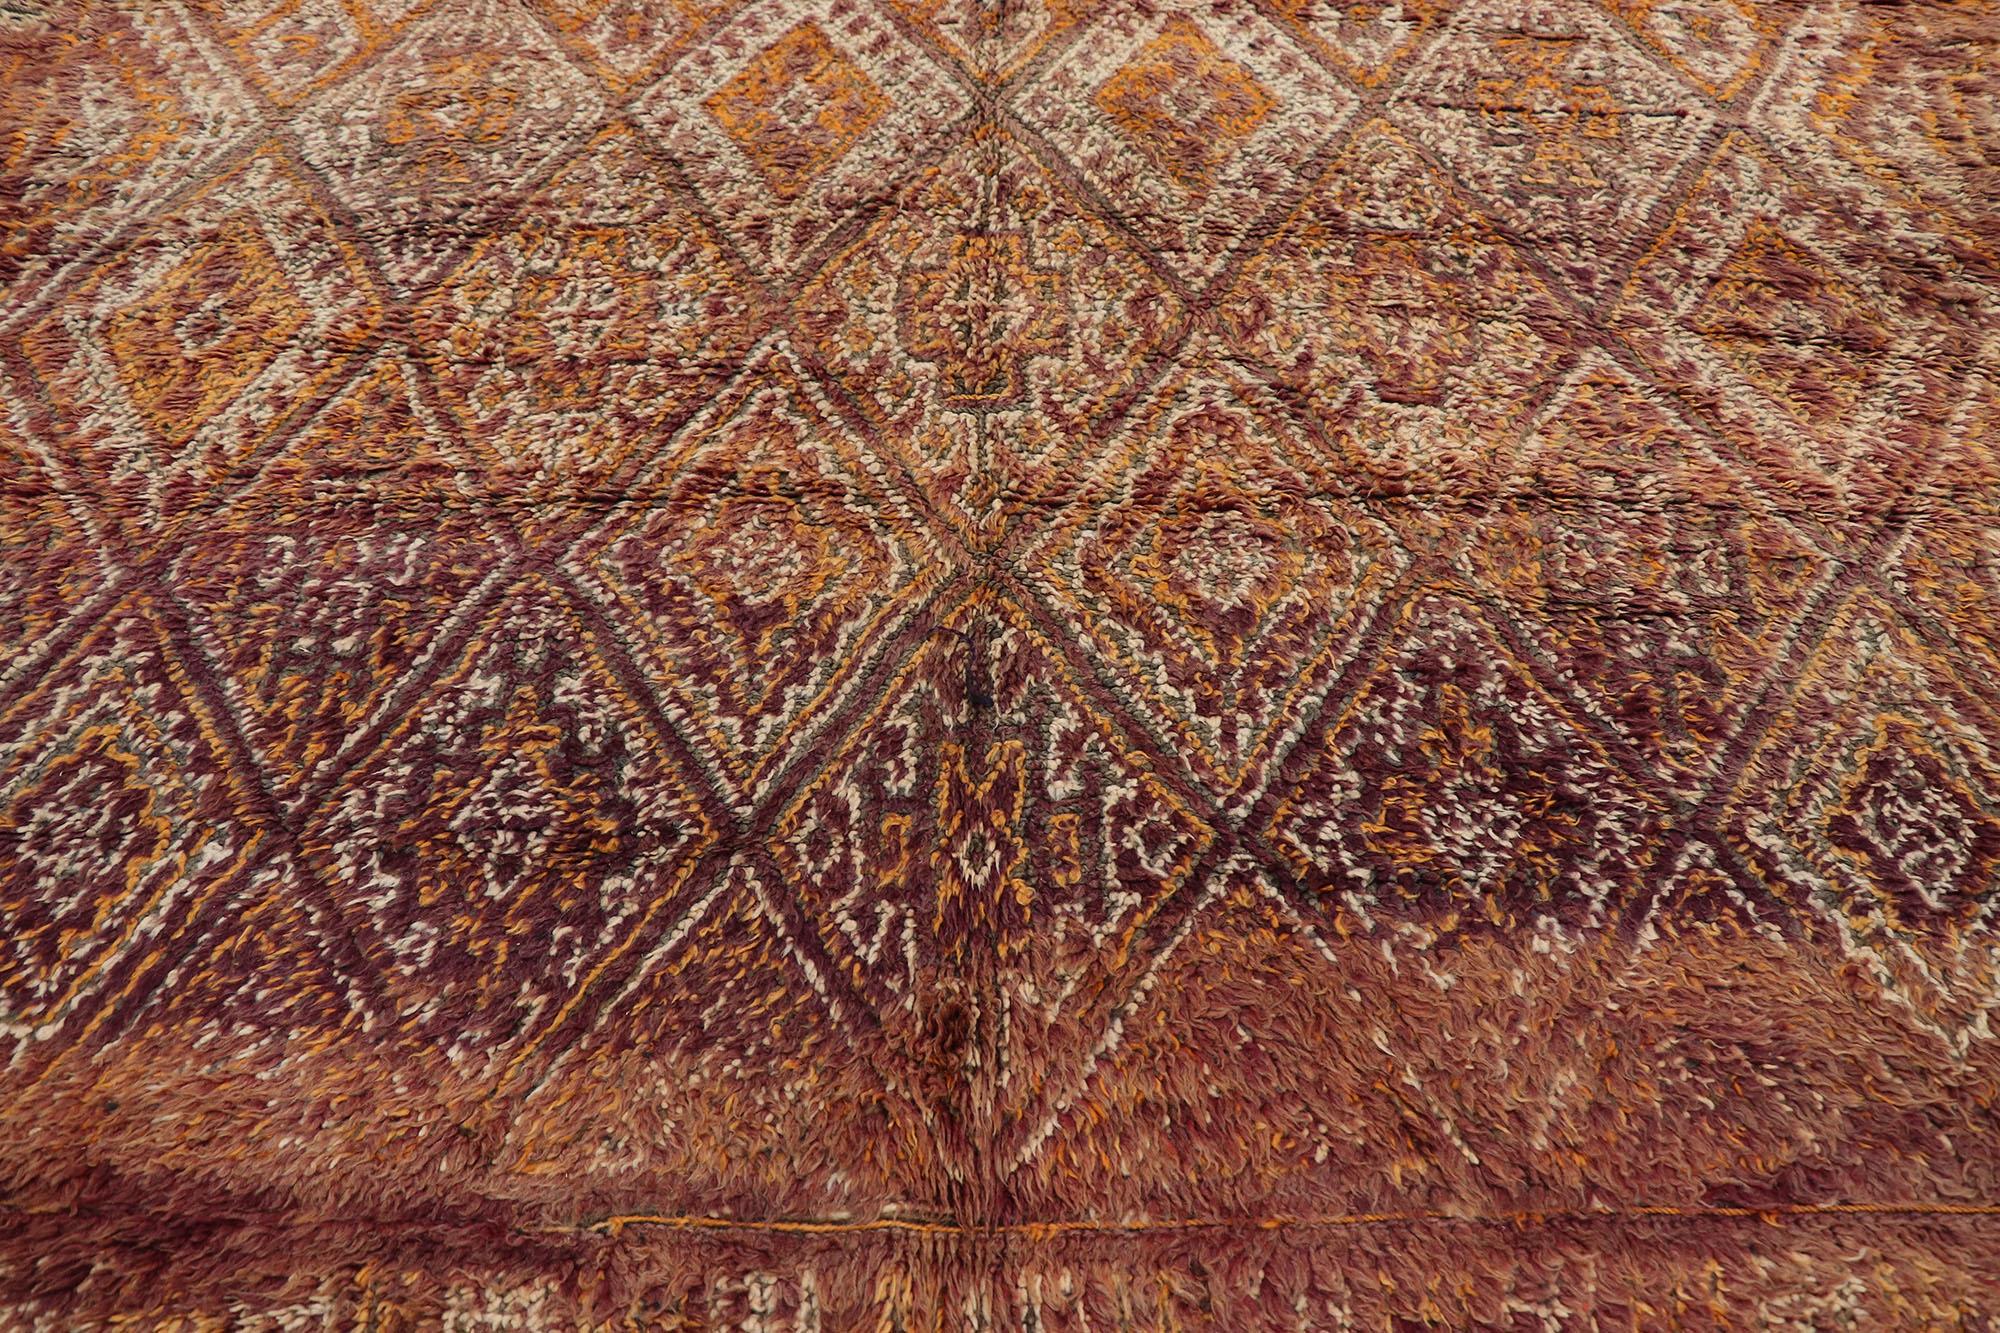 Hand-Knotted Vintage Beni MGuild Moroccan Rug, Midcentury Meets Autumn Harvest